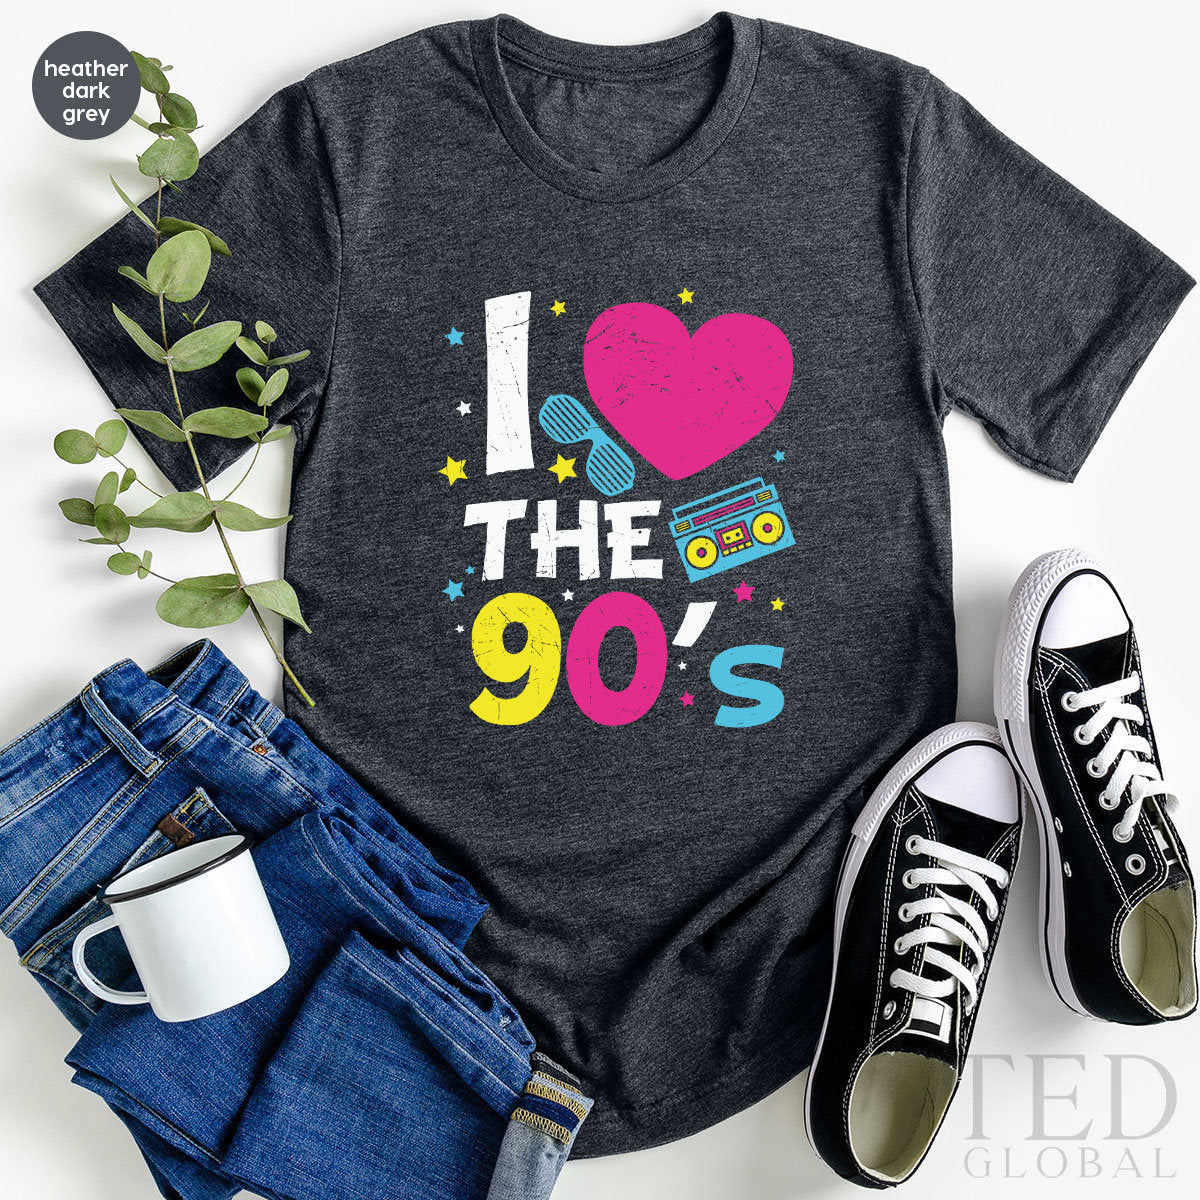 Cute I Heart The Cassette T-Shirt, Historical T Shirt, Multi-Colored Shirts, Color Revel 90s Shirt, Cassette TShirt, Gift For 90's Birthday - Fastdeliverytees.com